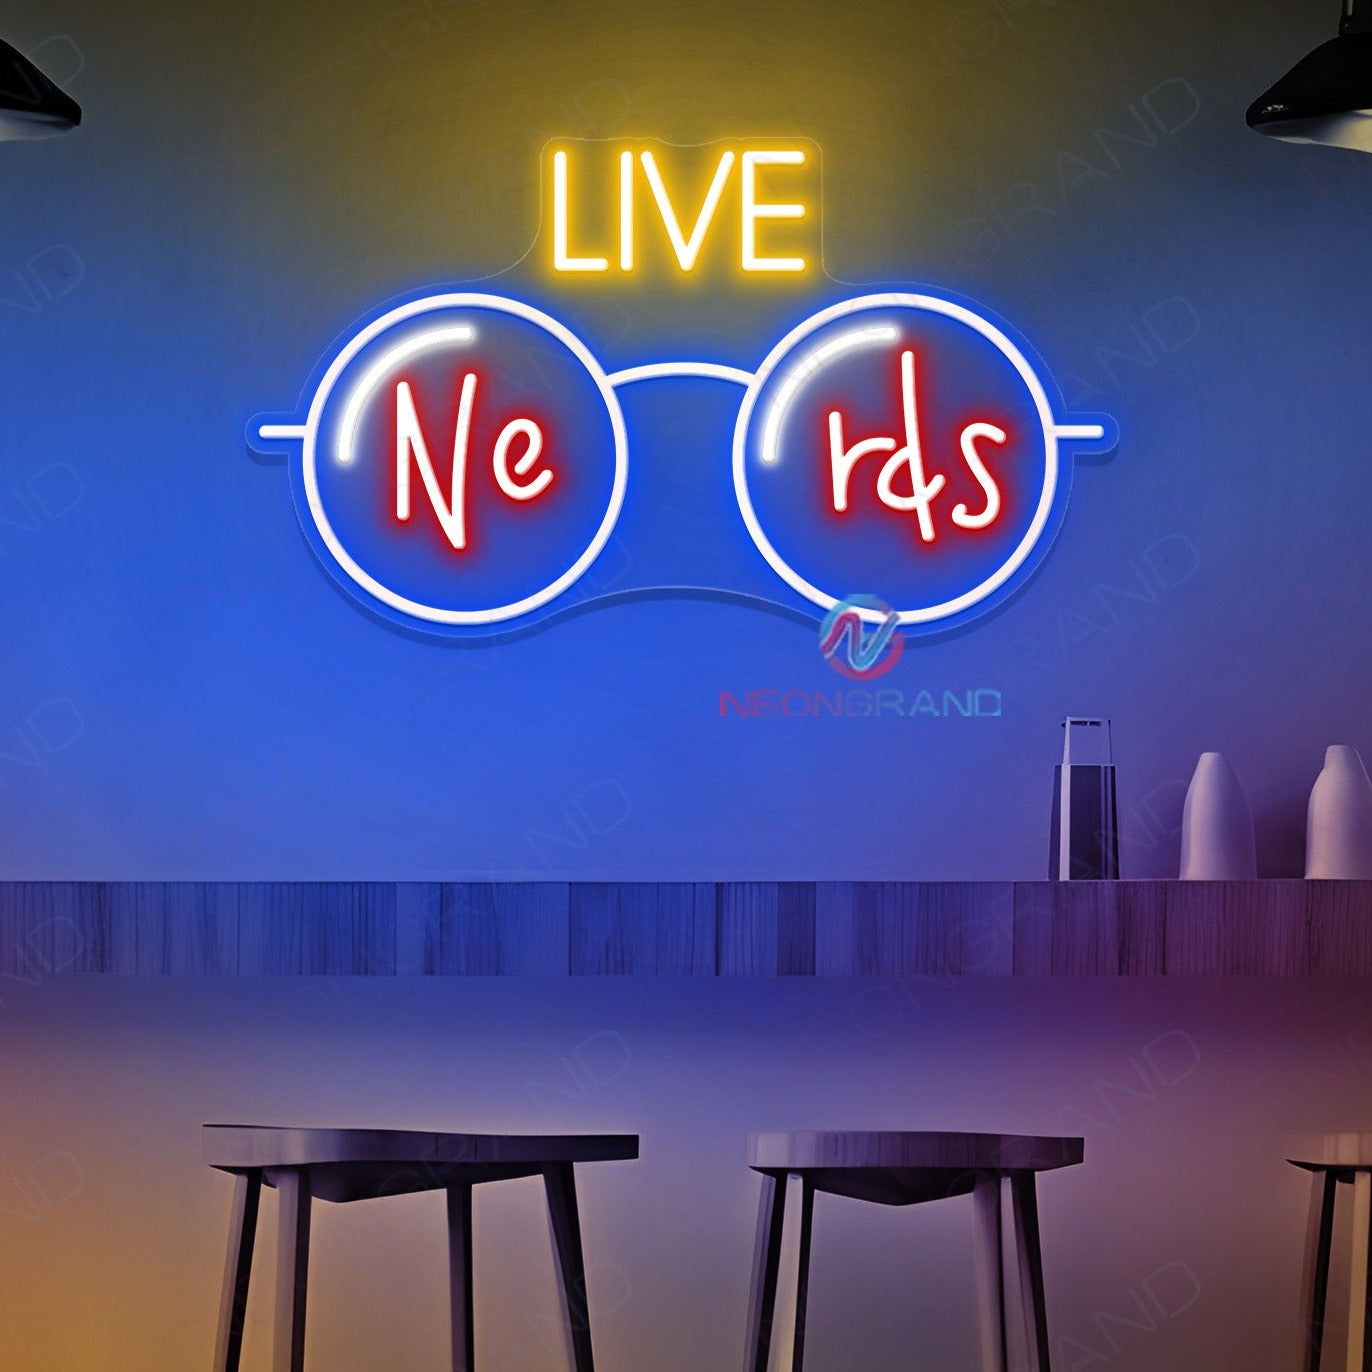 Live Nerds Neon Sign Man Cave Led Light blue